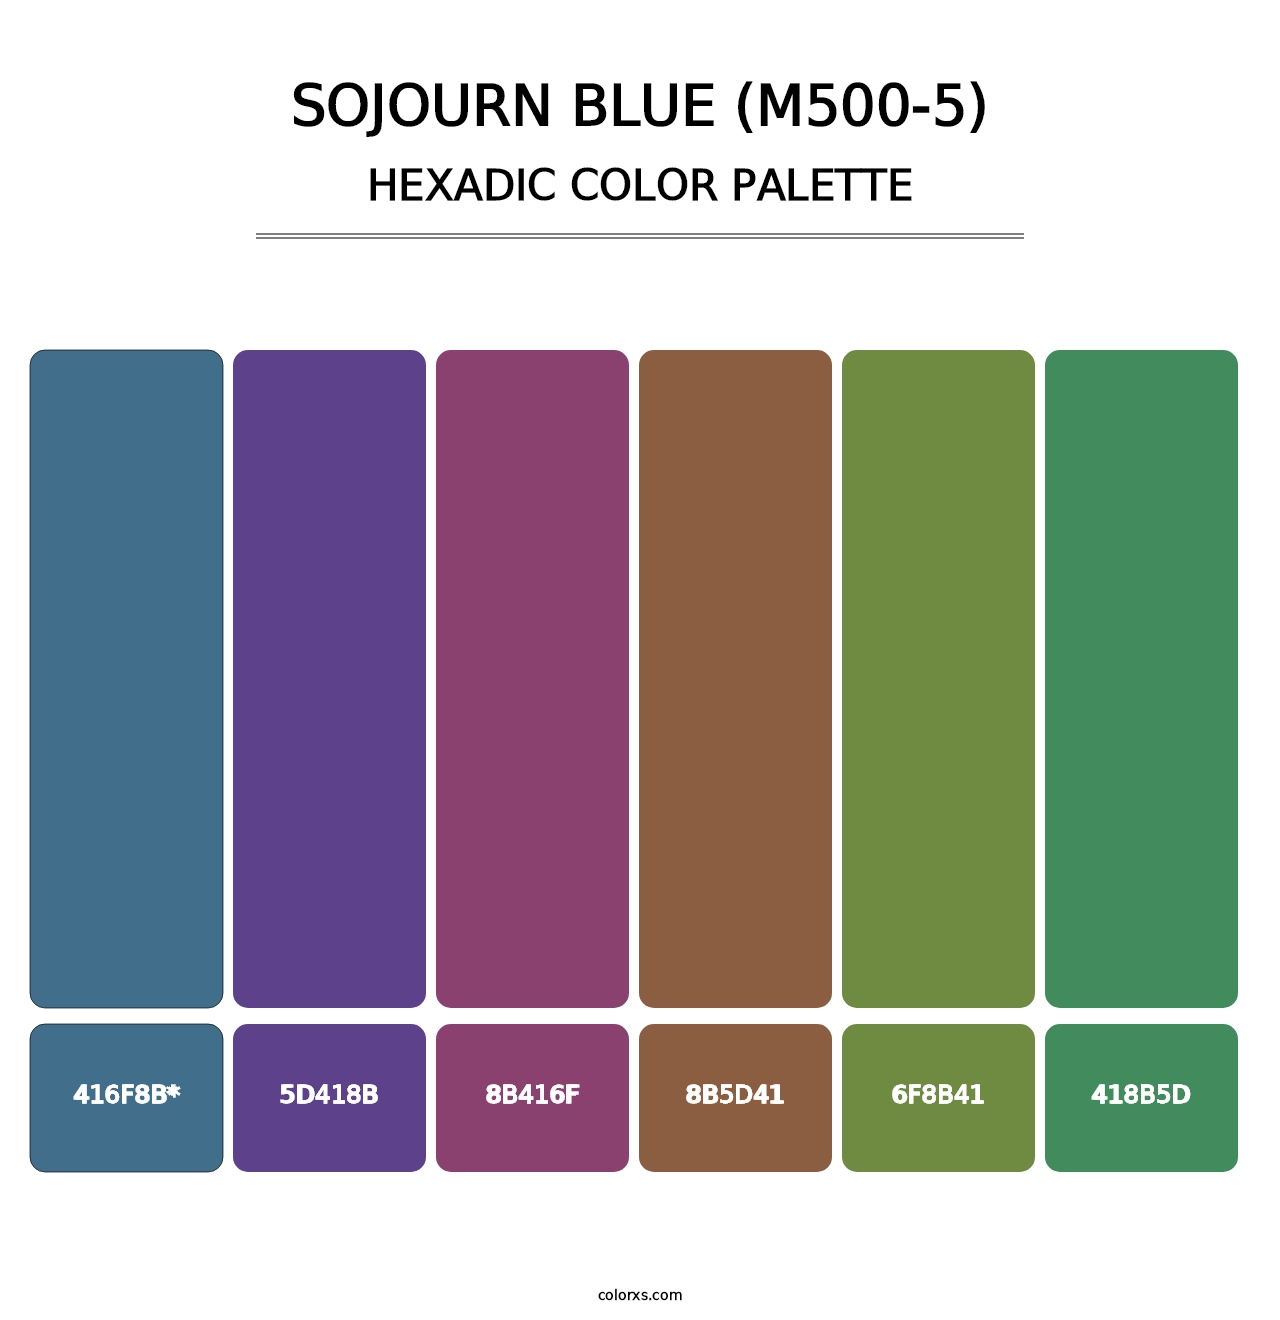 Sojourn Blue (M500-5) - Hexadic Color Palette